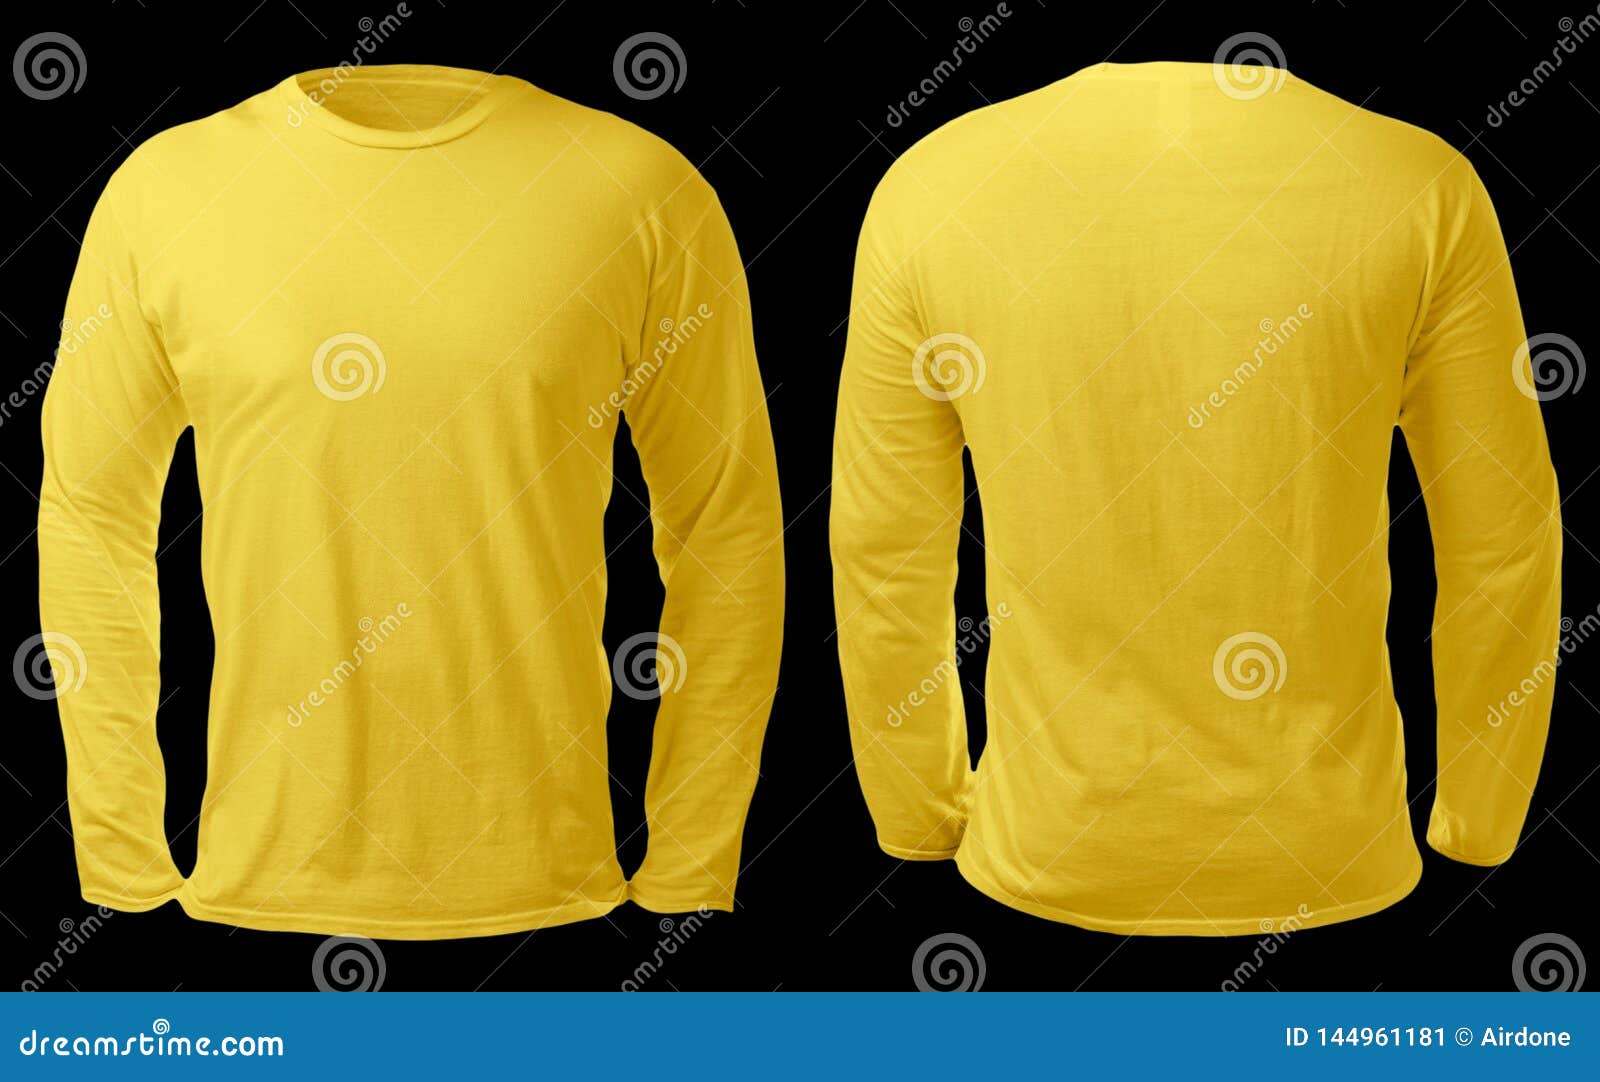 Adult Unisex Shirt Blessed Camisa Unisexo para Adultos Bendecida en Ingles